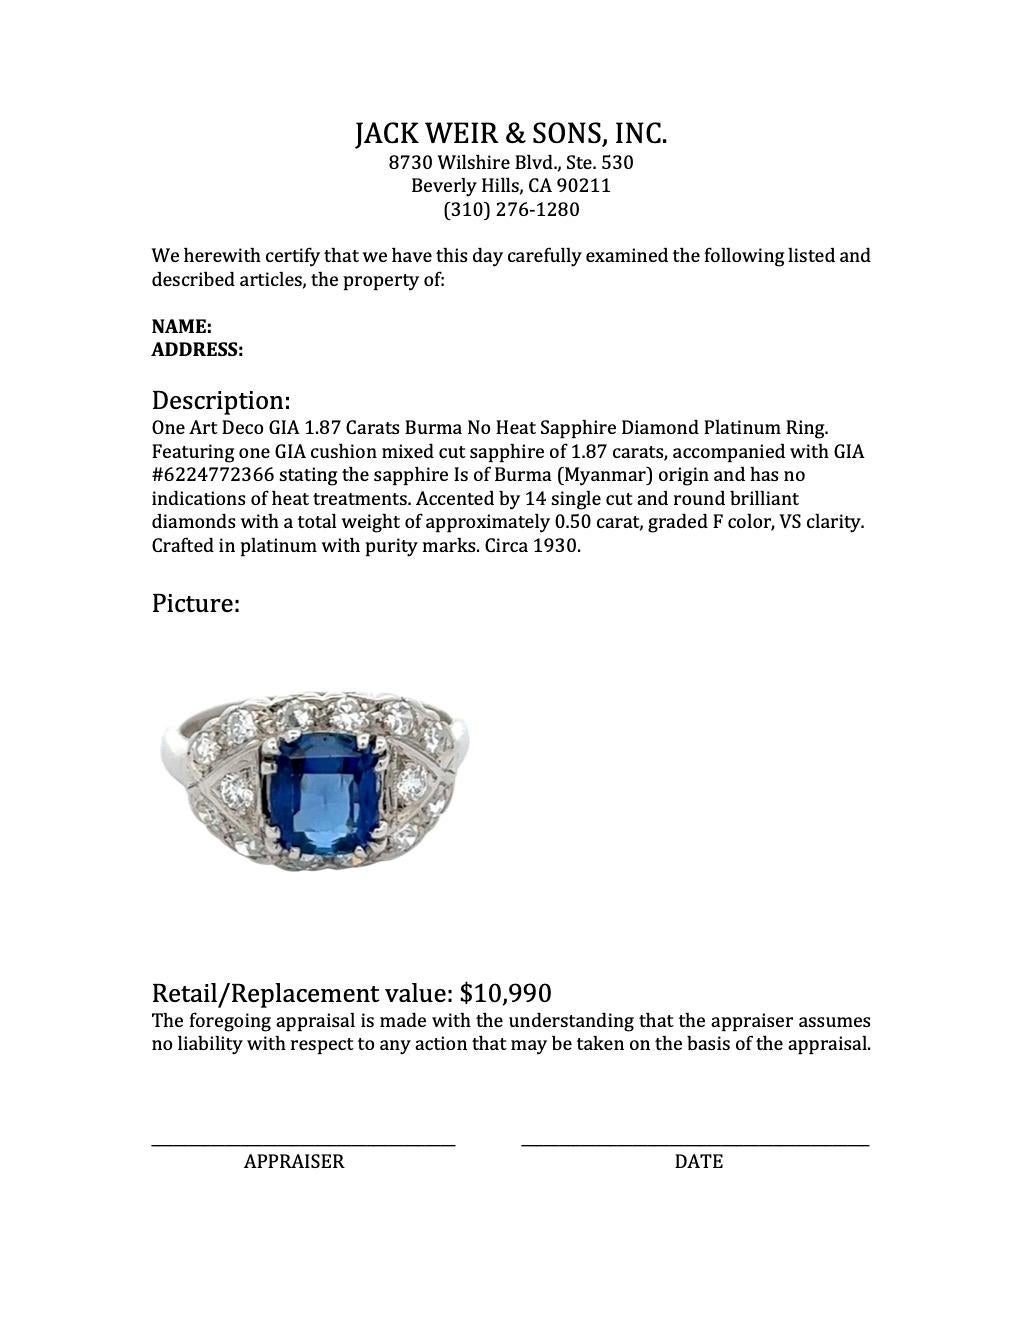 Art Deco GIA 1.87 Carats Burma No Heat Sapphire Diamond Platinum Ring 3